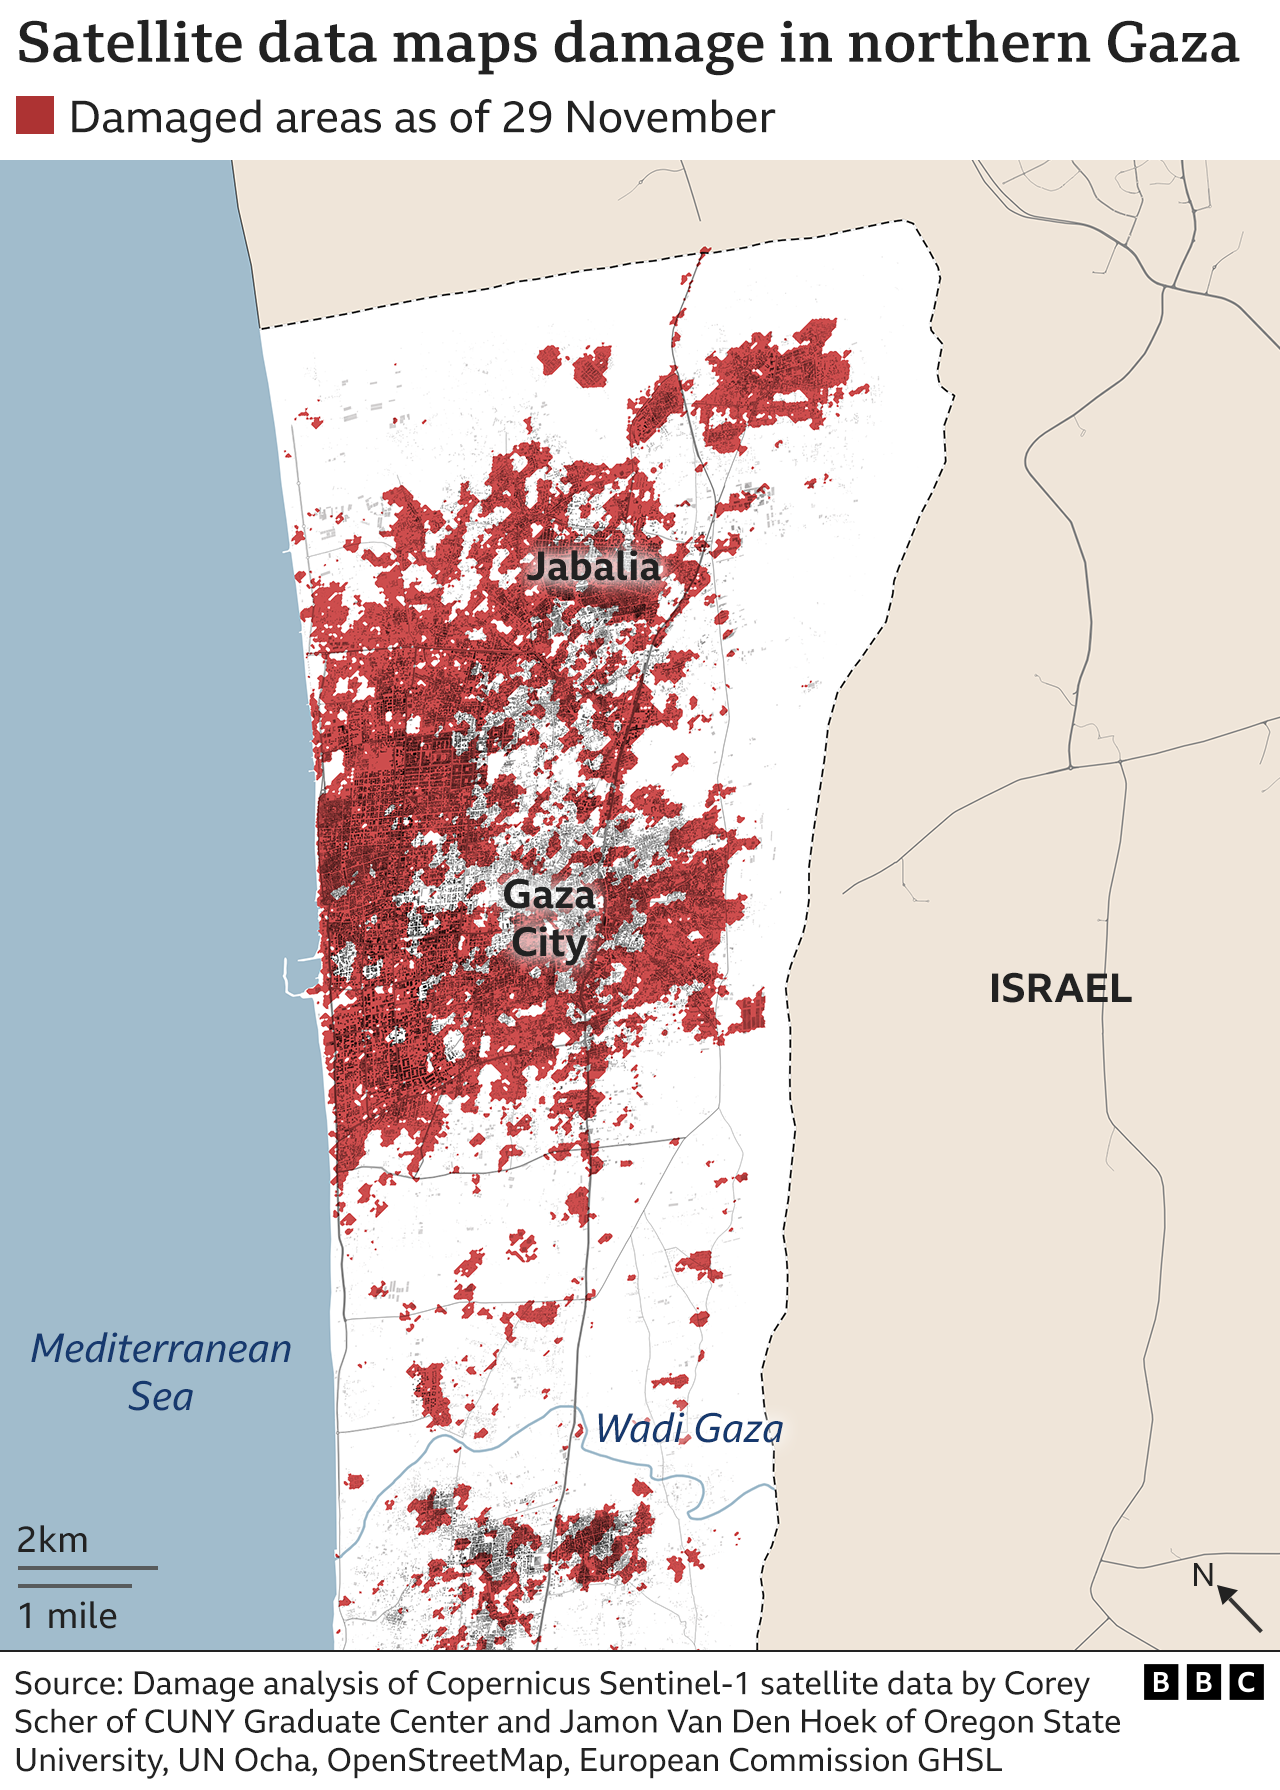 Map show damage for northern Gaza up to 29 November using satellite analysis